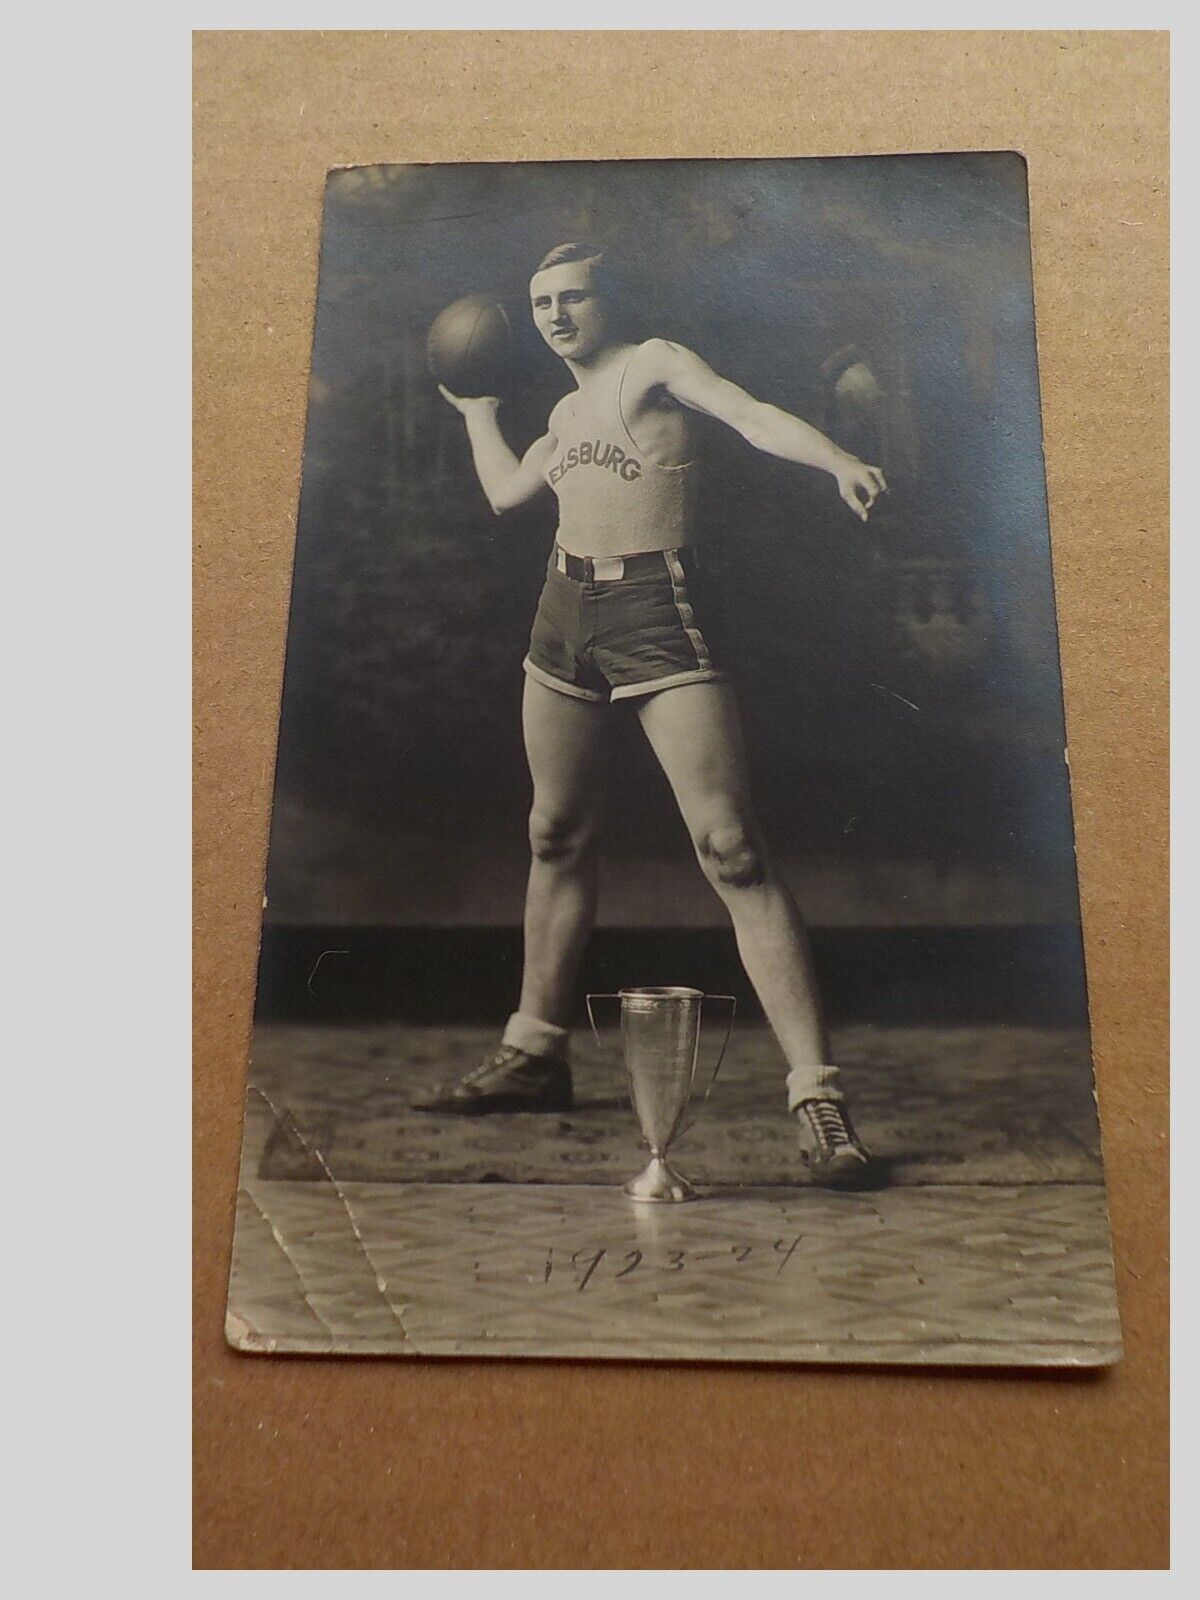 VINTAGE 1923-24  INDIANA LEESBURG REAL PHOTO  BASKETBALL PLAYER